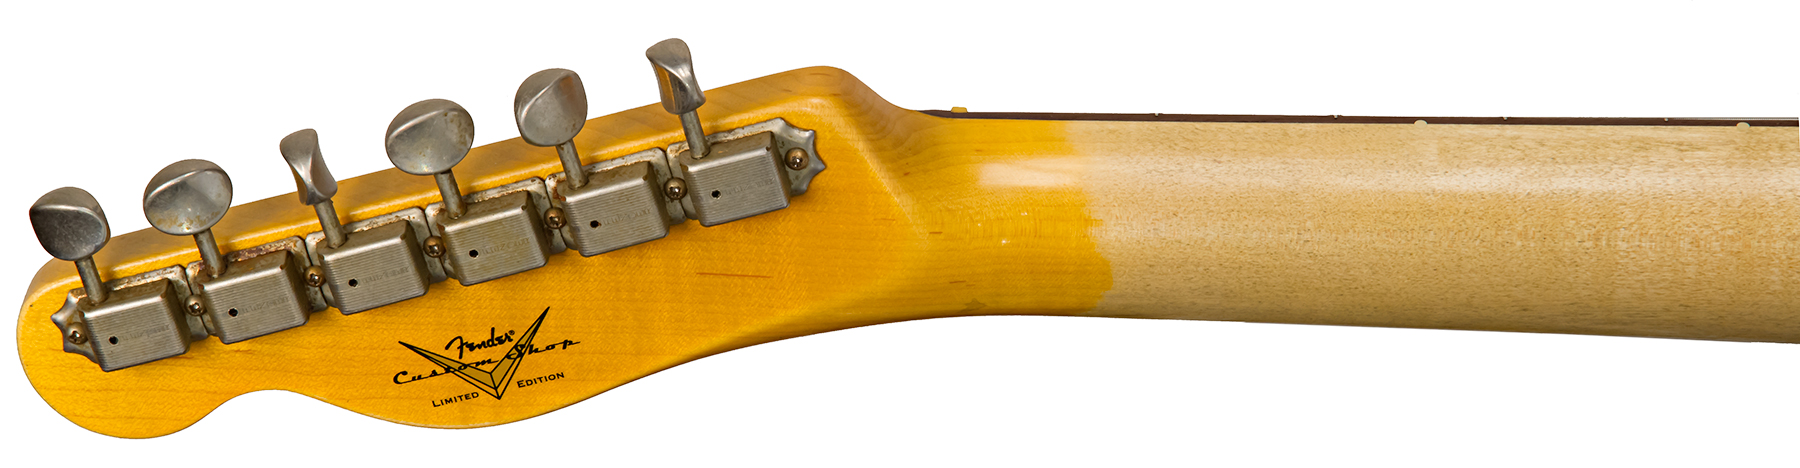 Fender Custom Shop Tele 1960 Rw #cz549121 - Journeyman Relic Purple Metallic - Tel shape electric guitar - Variation 5